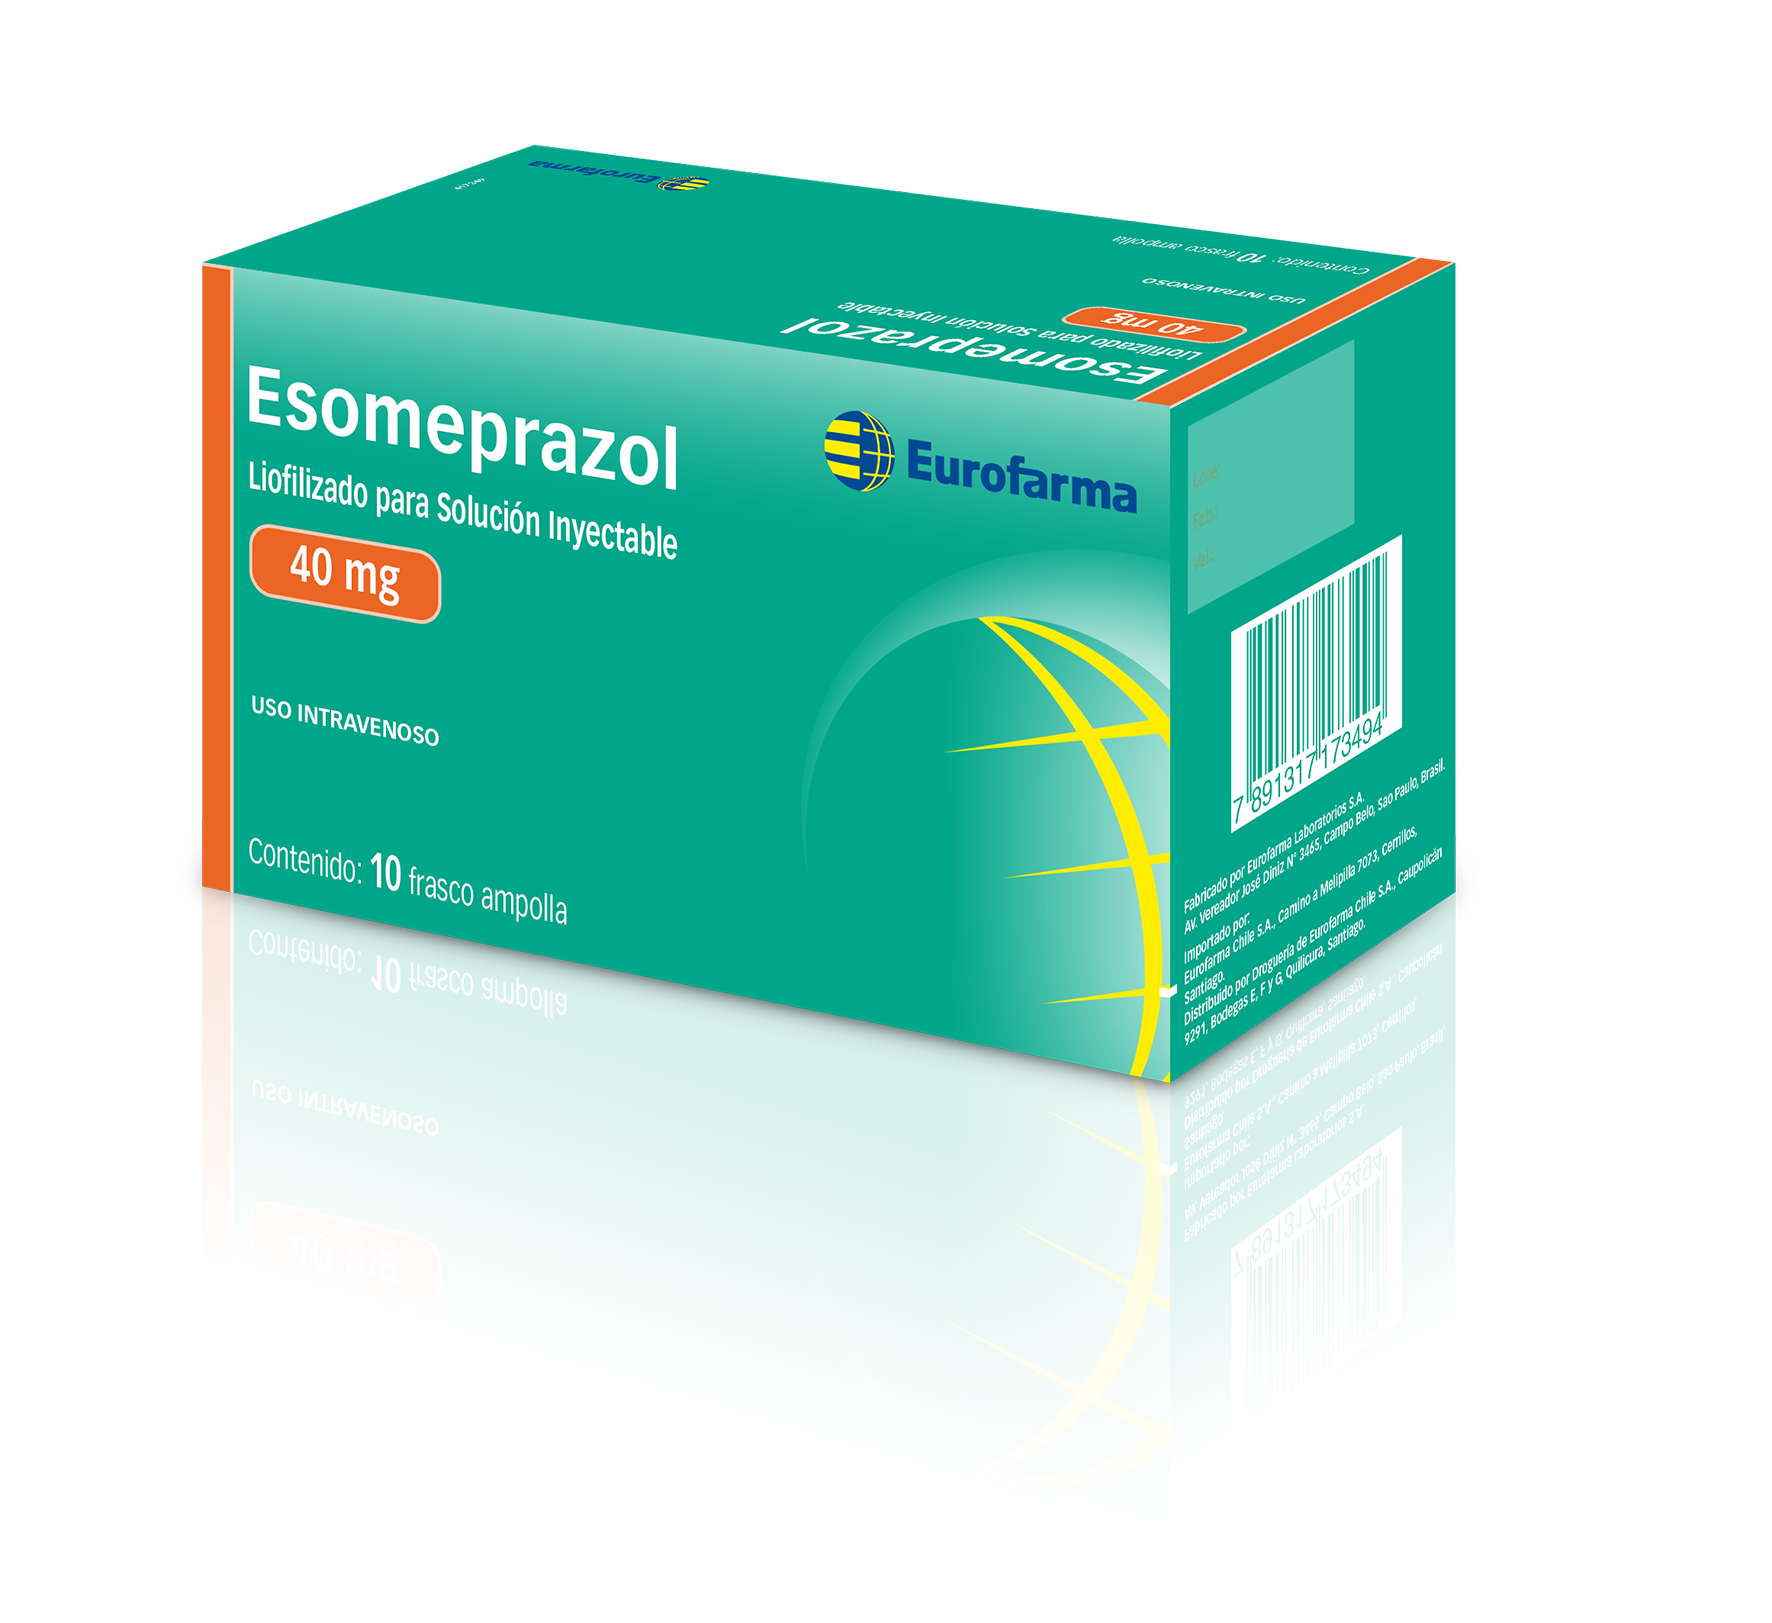 Esomeprazol 40 mg. inyectable